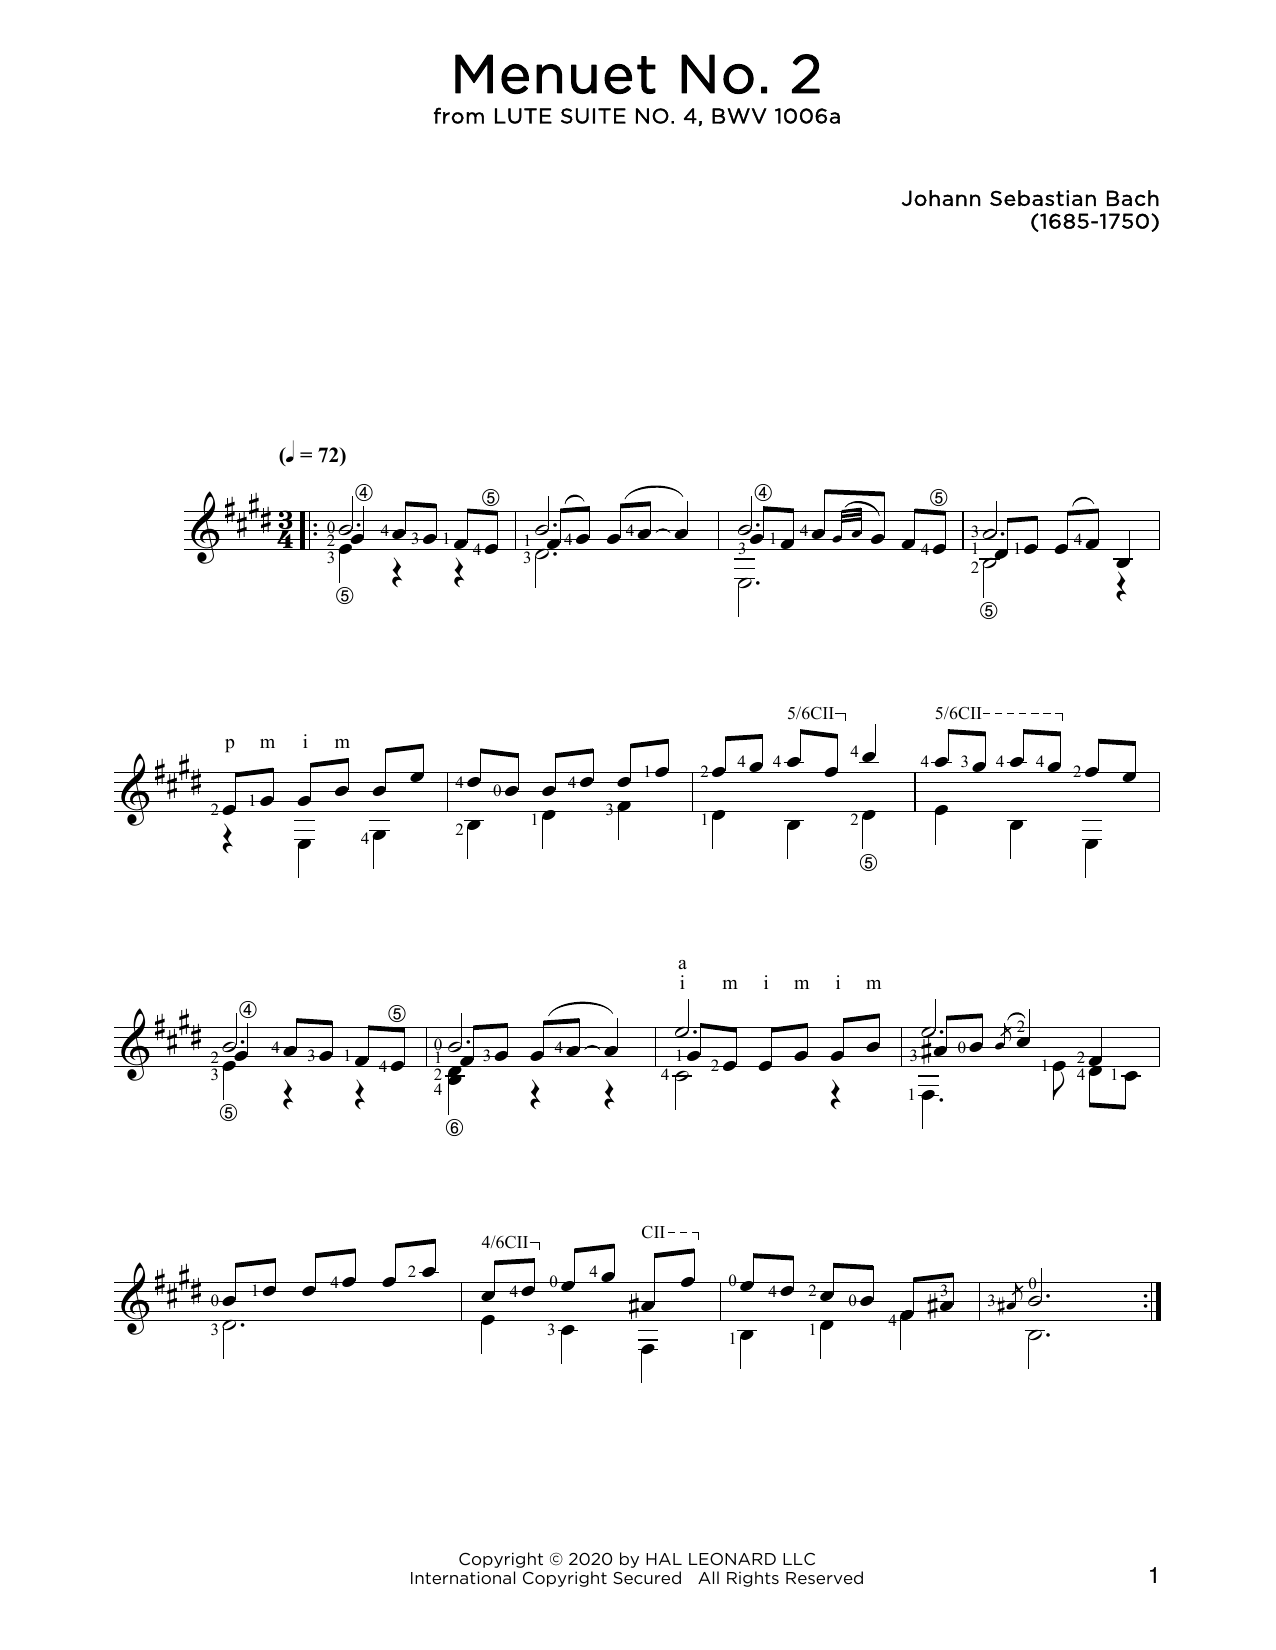 Johann Sebastian Bach Menuet No. 2 Sheet Music Notes & Chords for Solo Guitar - Download or Print PDF